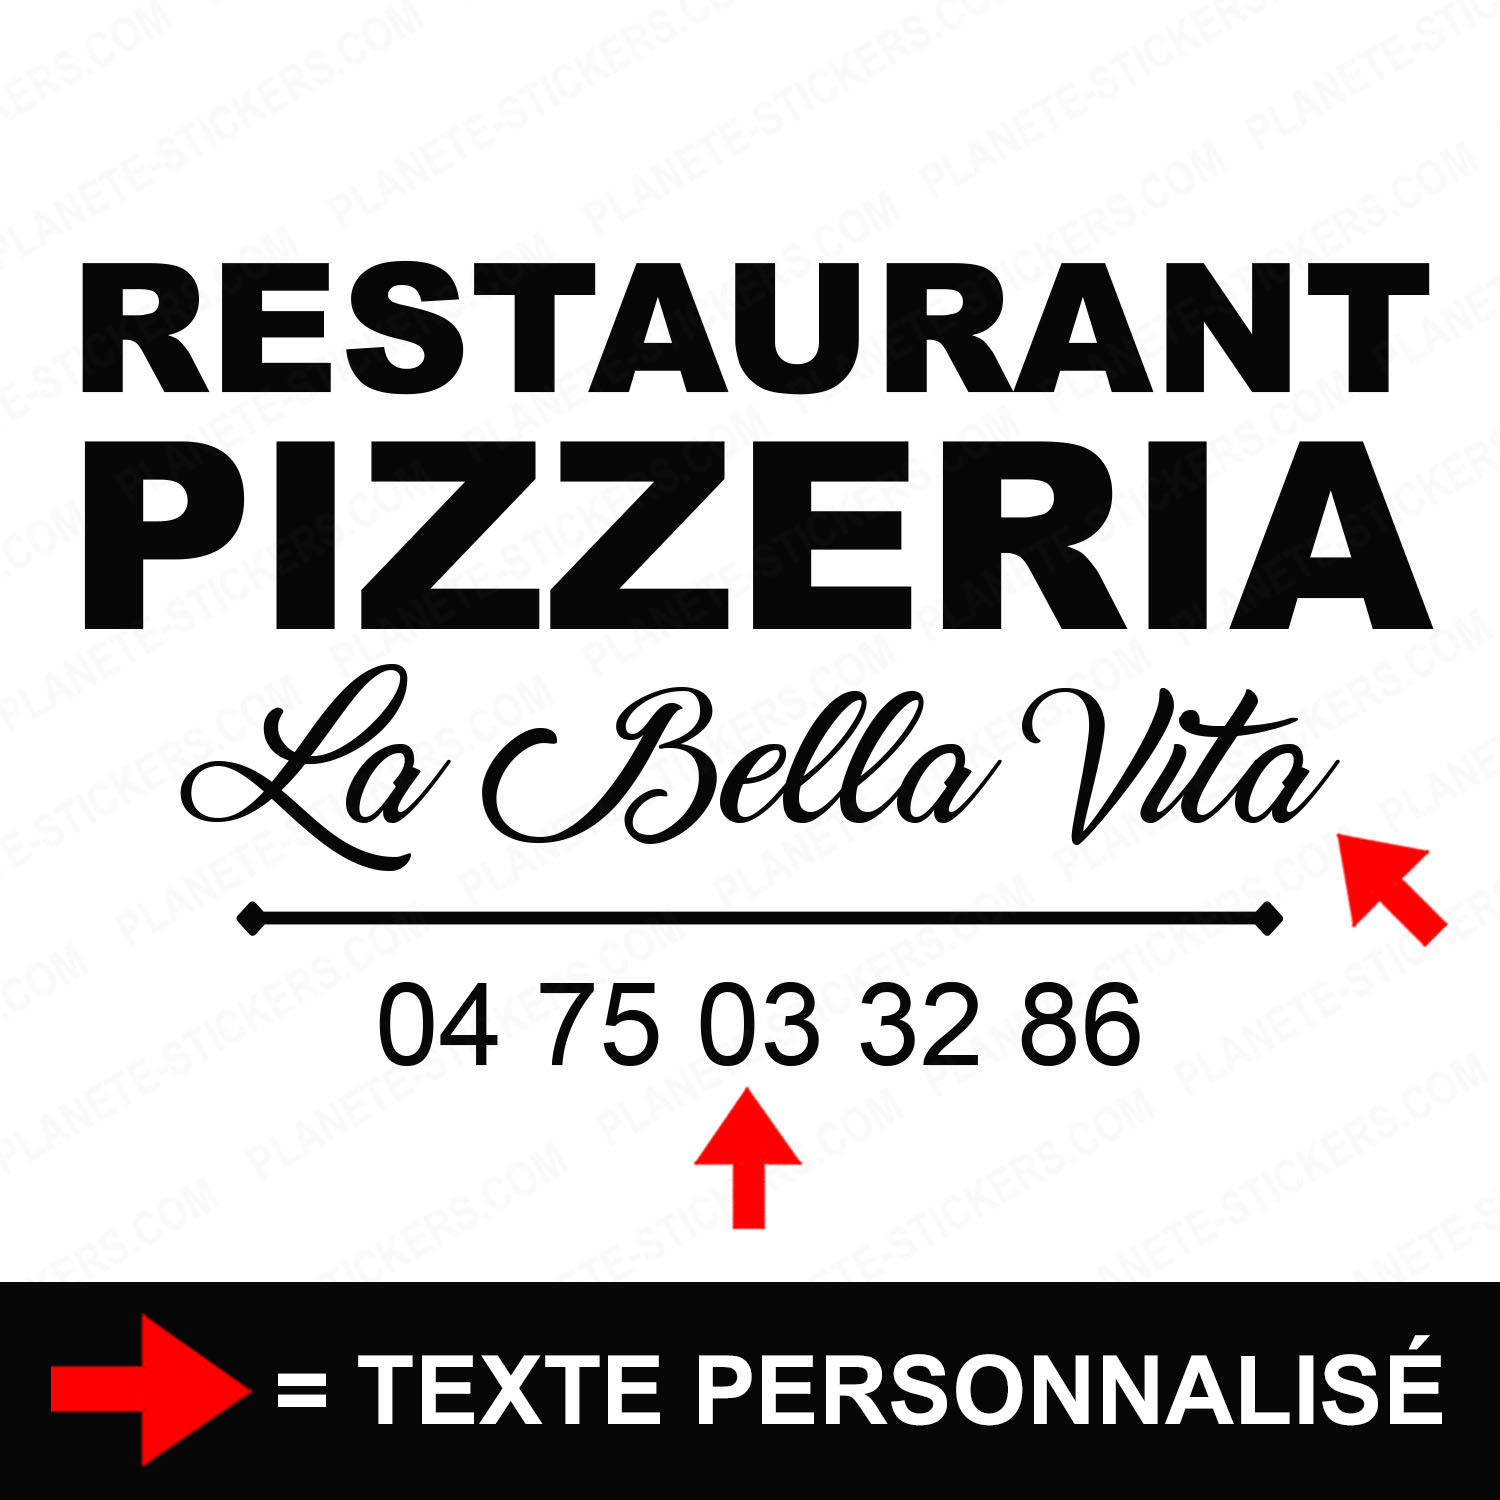 ref29pizzeriavitrine-stickers-restaurant-pizzeria-vitrine-pizza-restaurant-sticker-personnalisé-autocollant-pro-restaurateur-vitre-resto-professionnel-logo-écriture-2